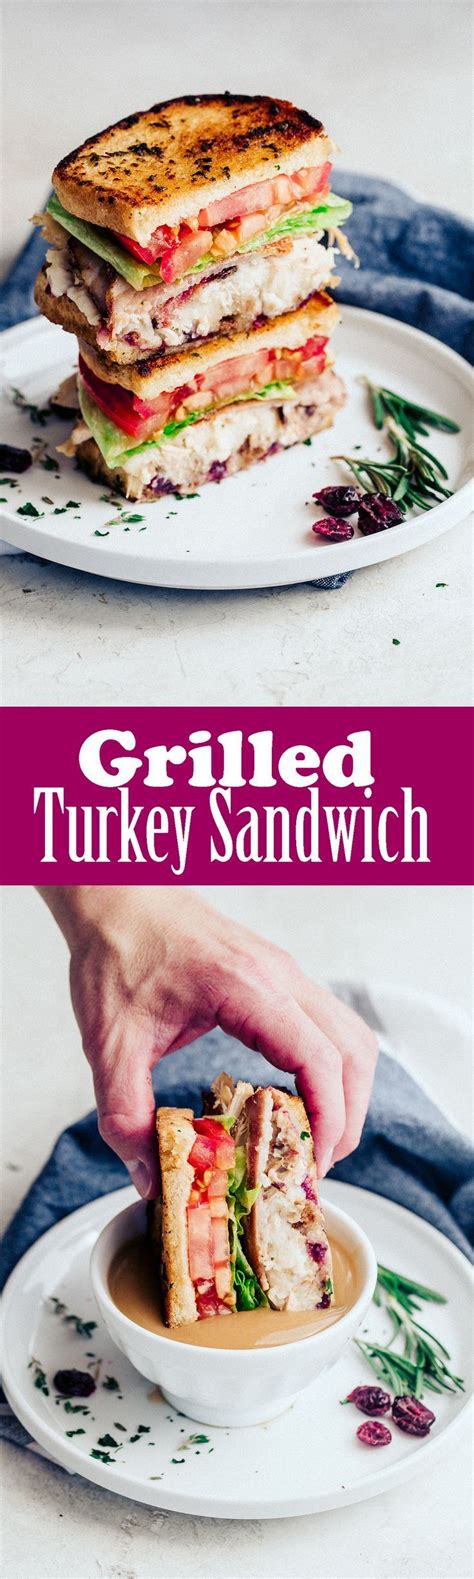 Grilled Turkey Sandwich TheFoodCafe Com Grilled Turkey Turkey